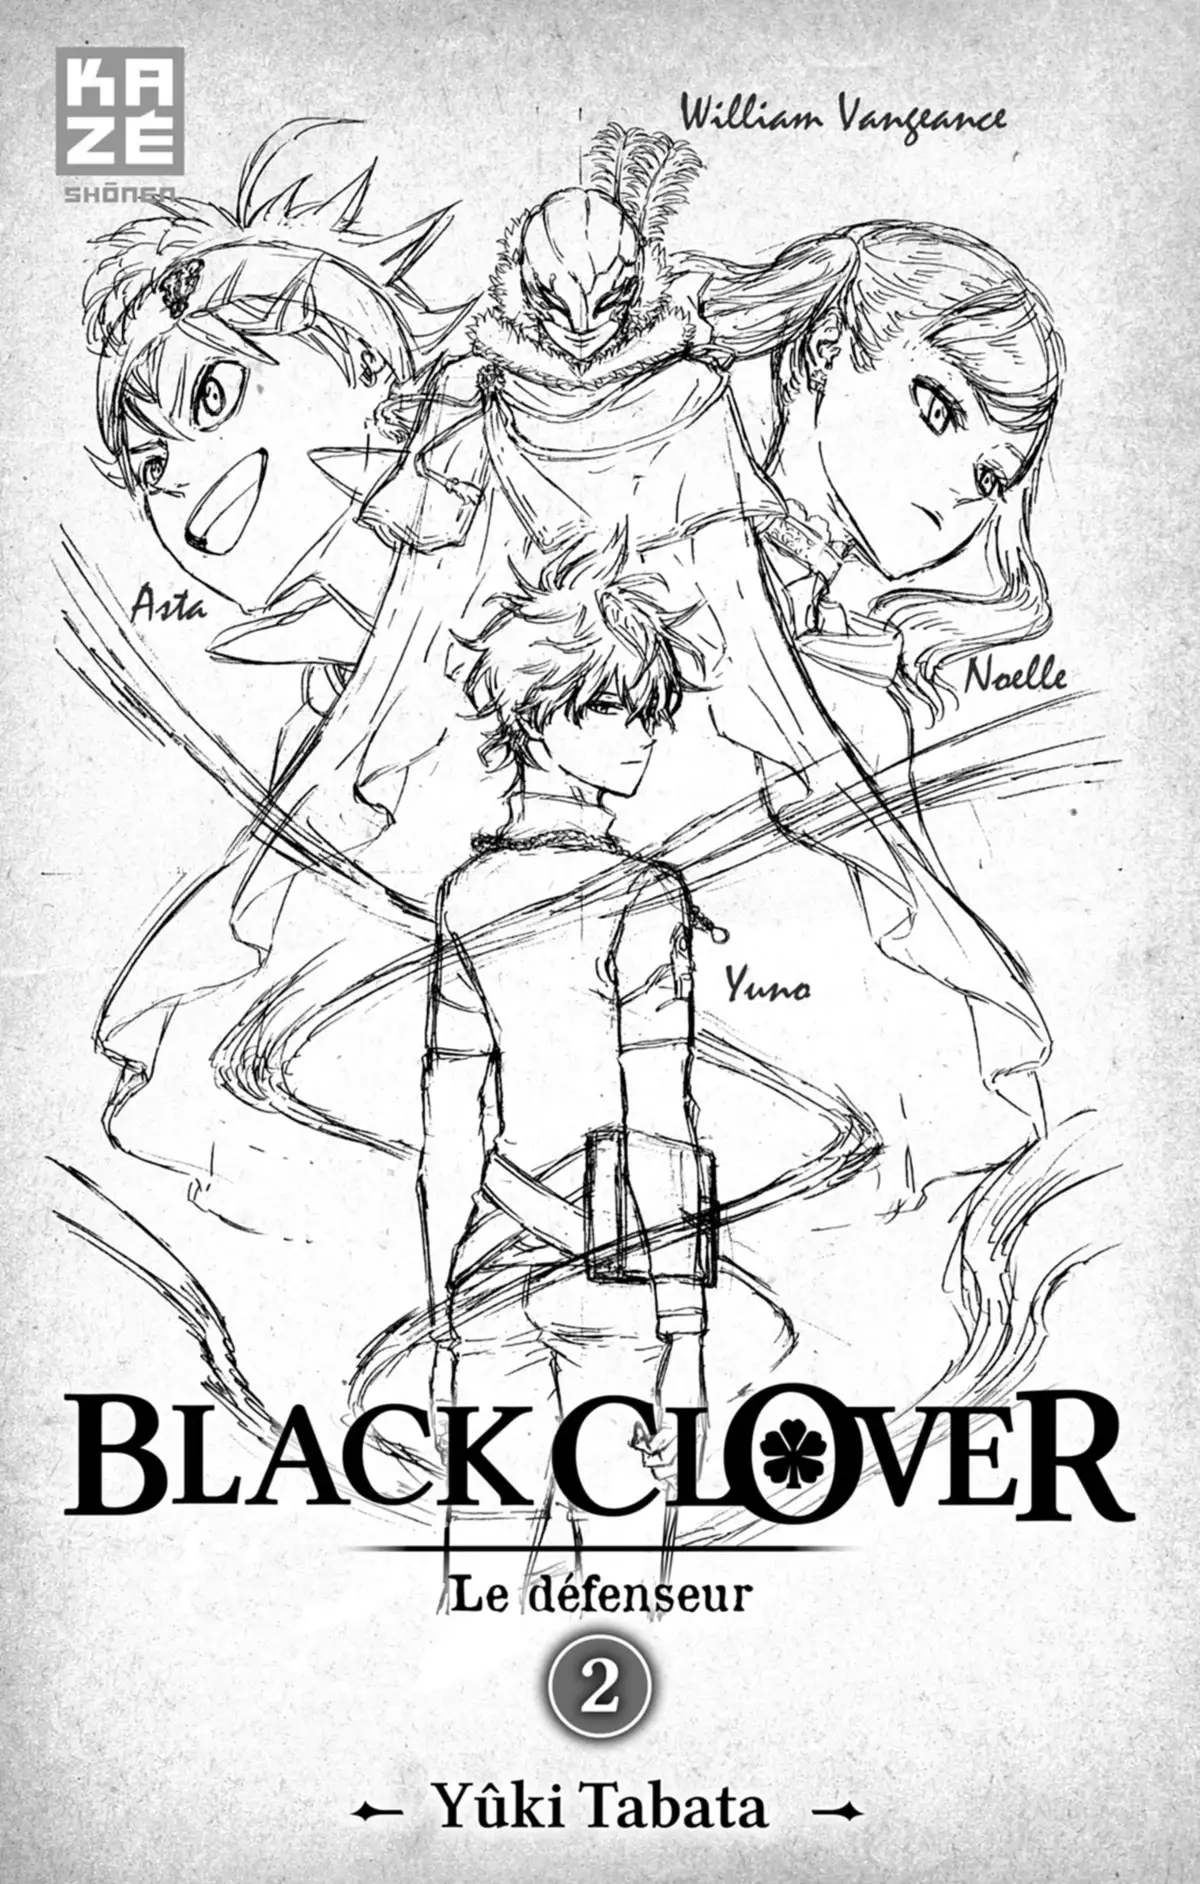 Black Clover Volume 2 page 2